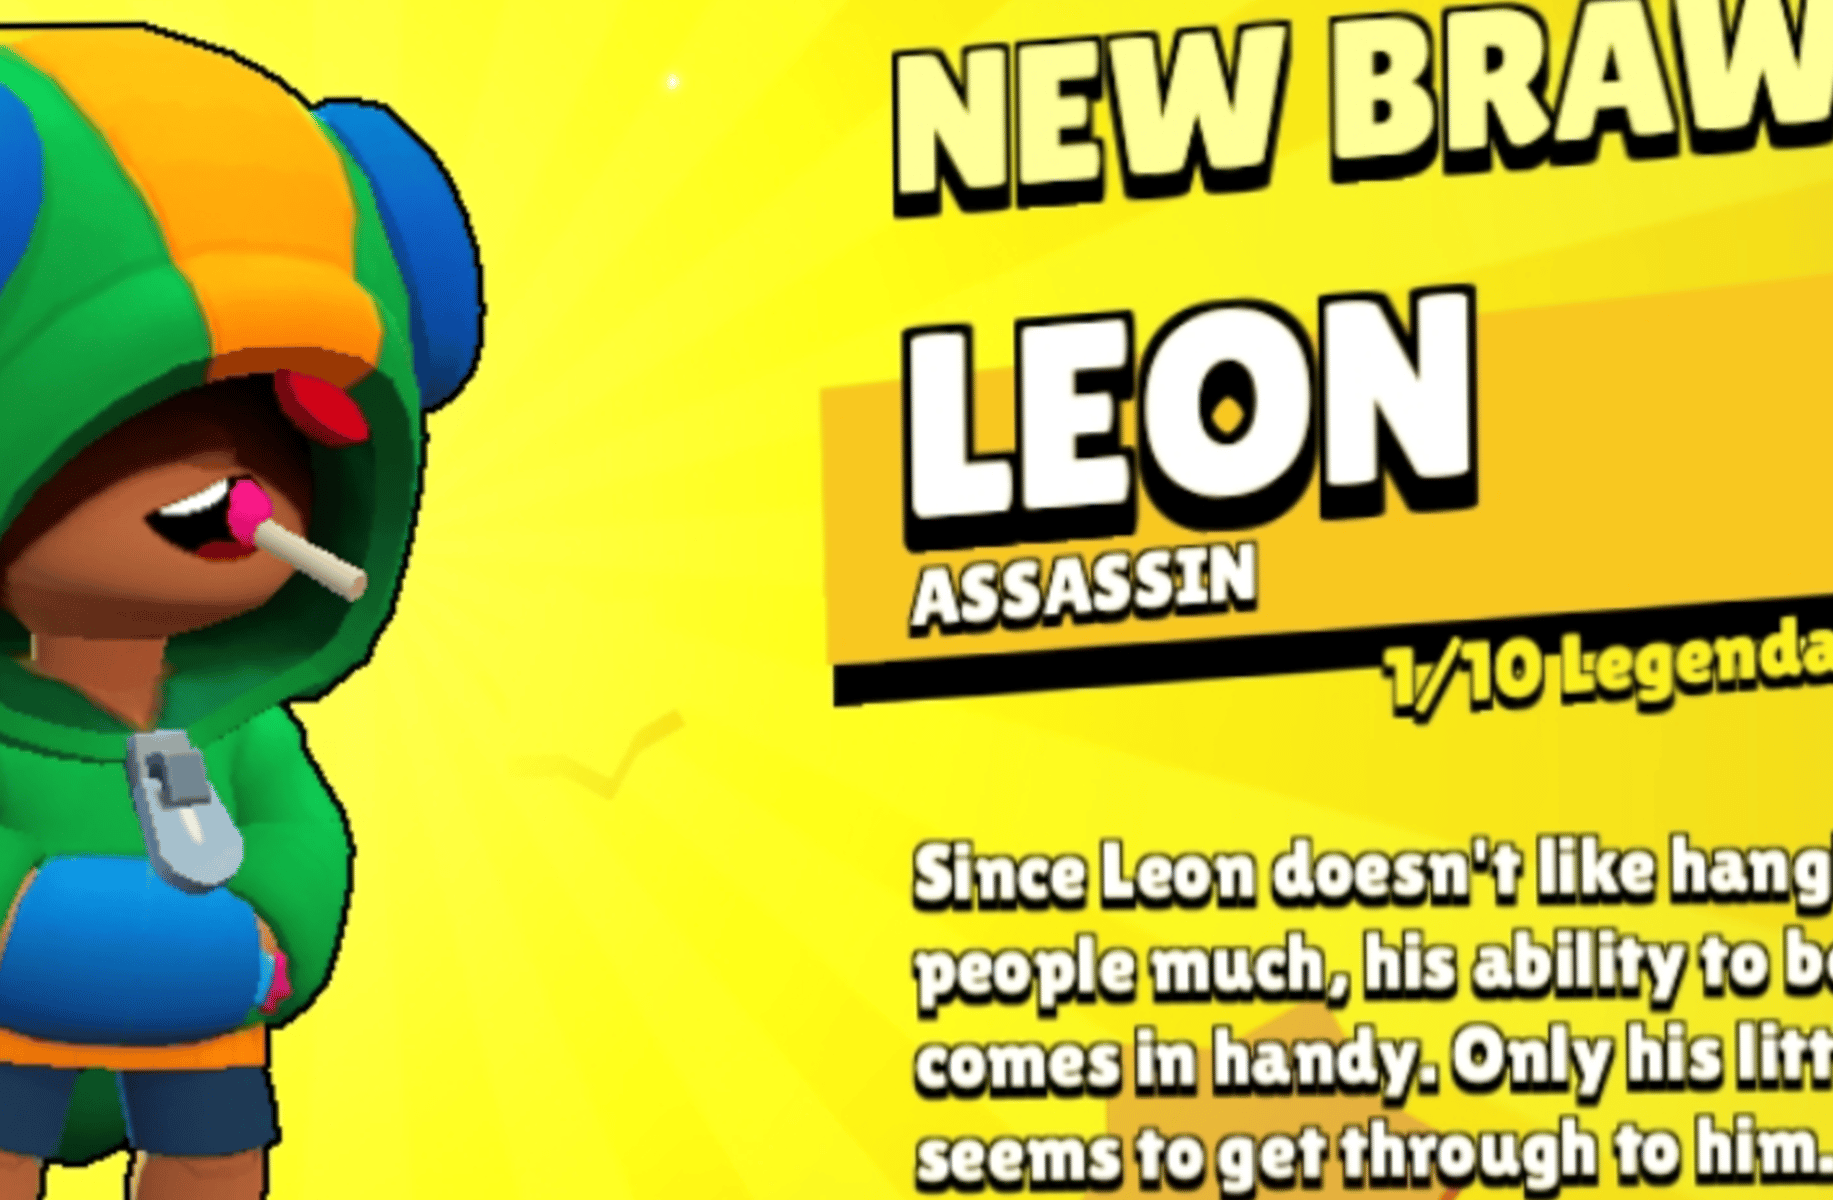 Leon (brawl stars)